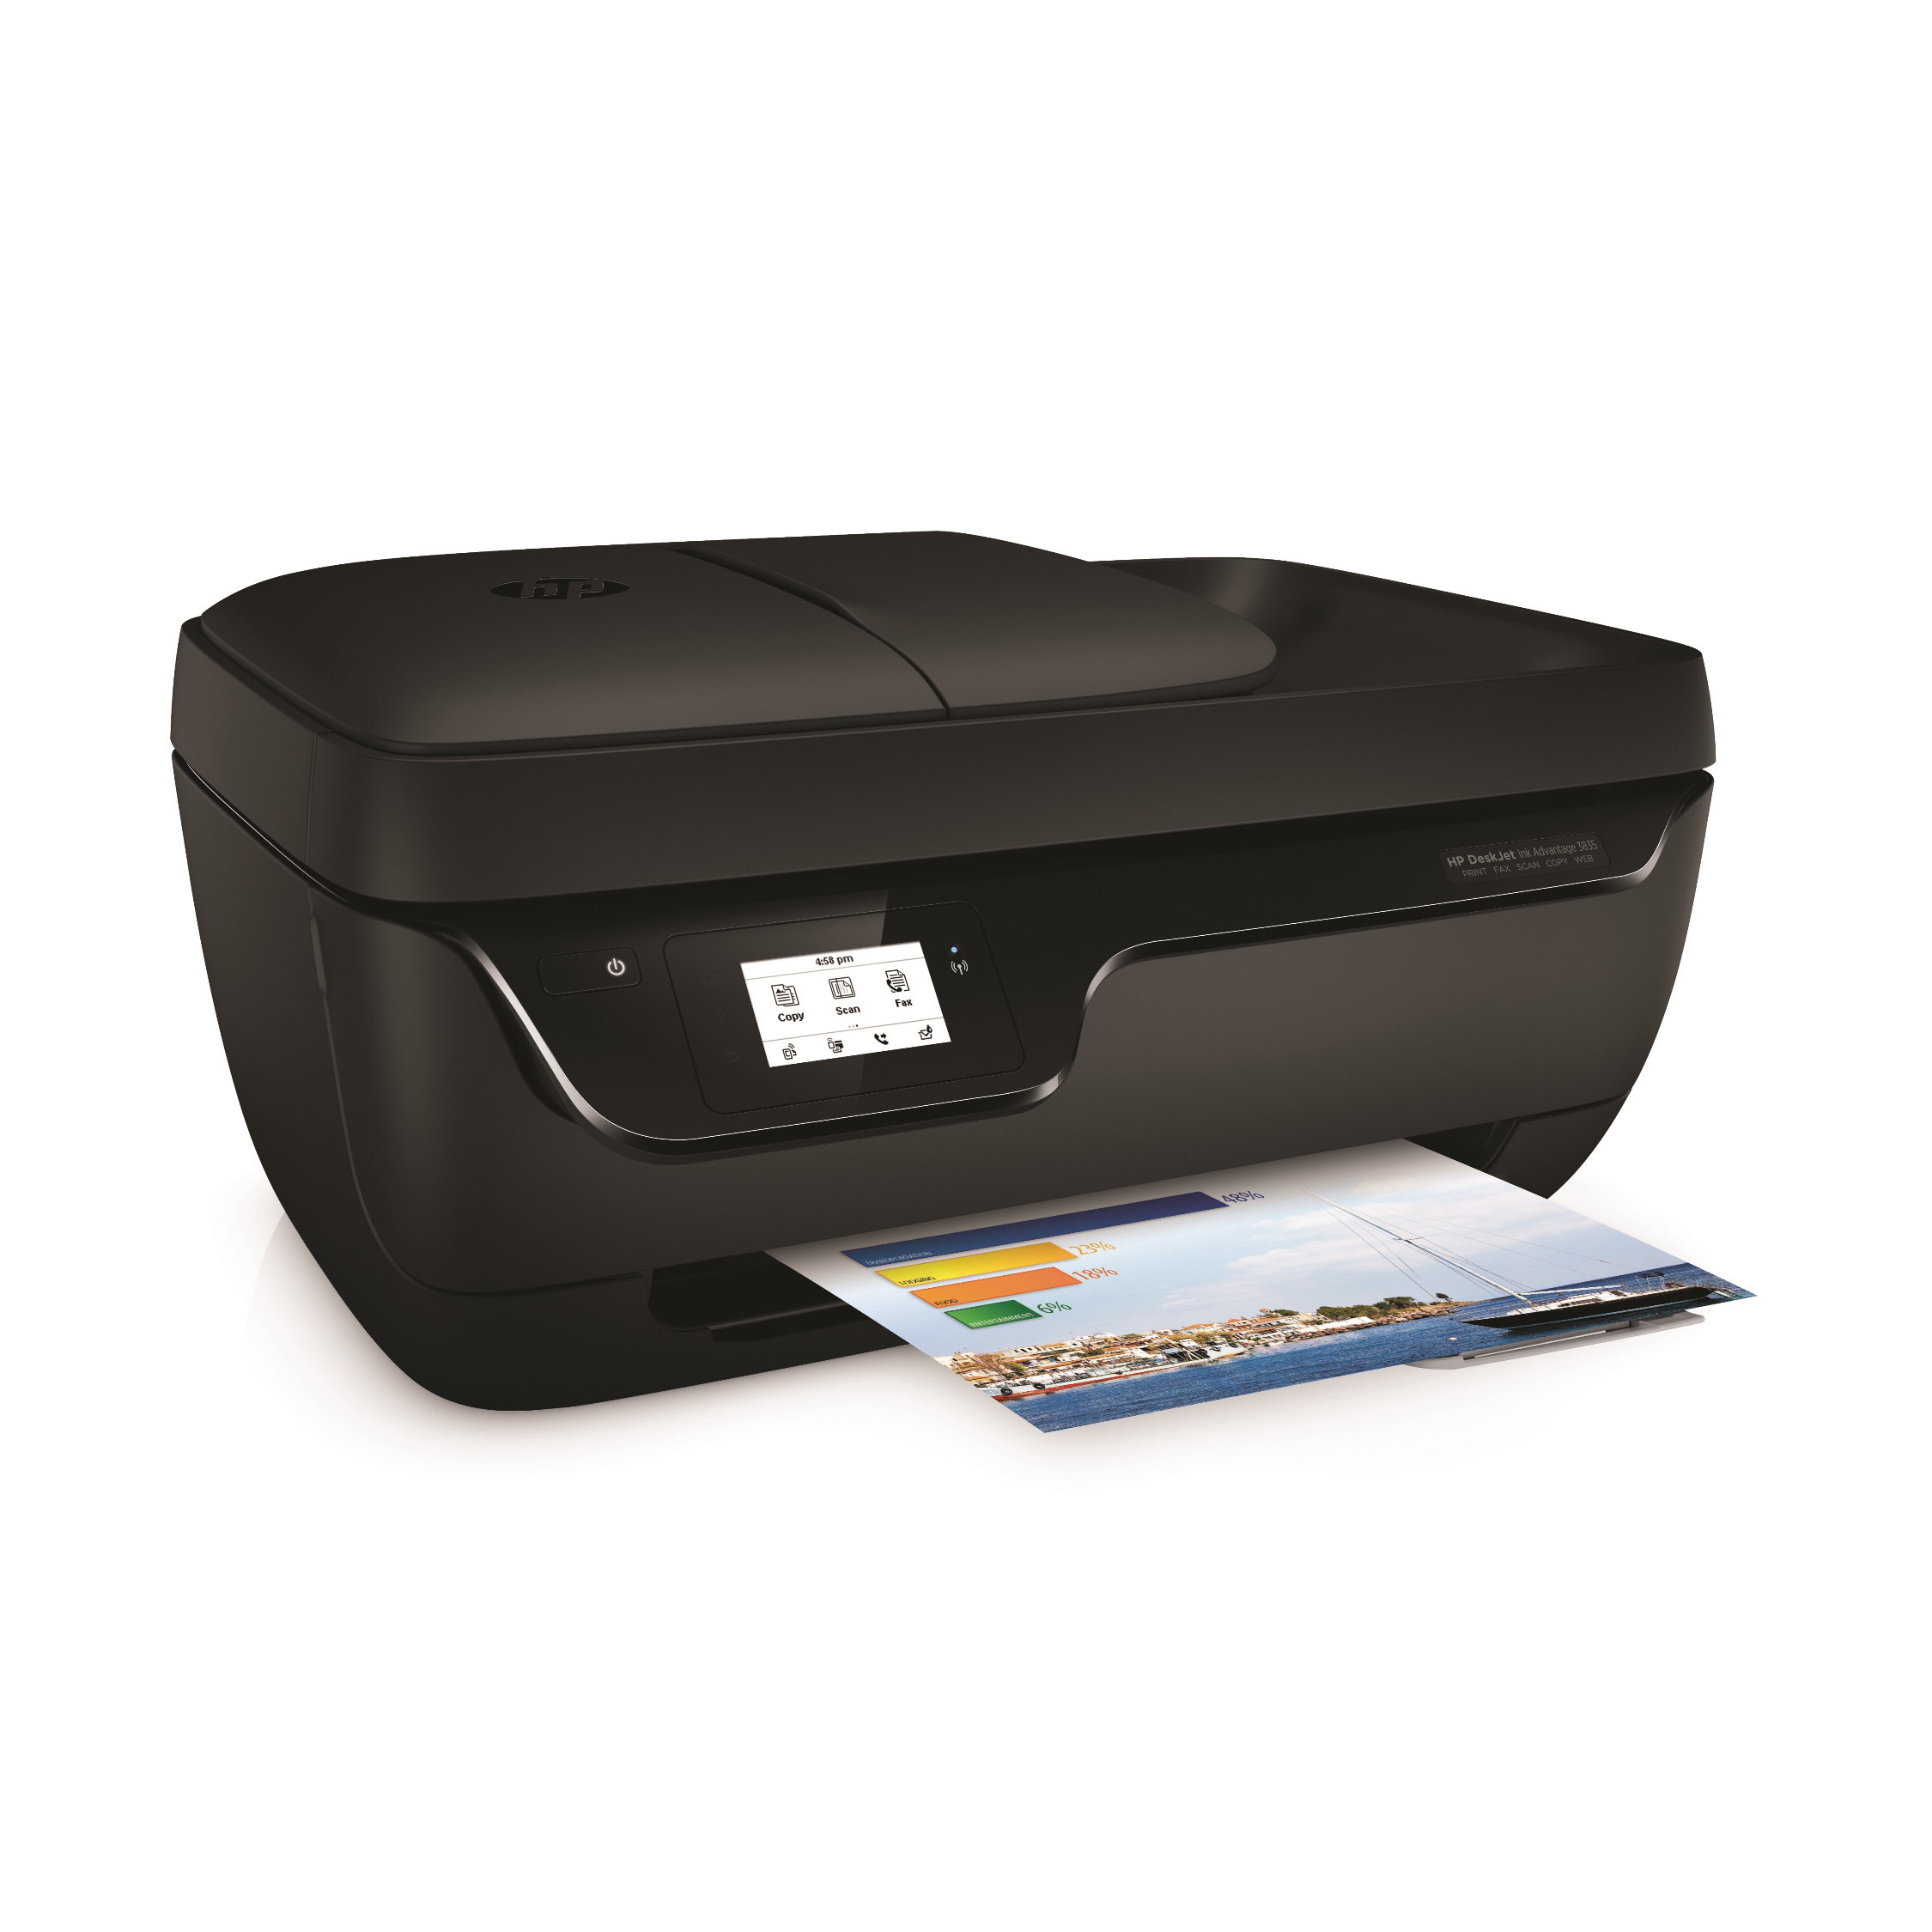 PR HP All-in-One Printer DeskJet Ink Advantage รุ่นใหม่ 3835, 4535, 4675 ราคาเริ่มต้น 3,900 ...